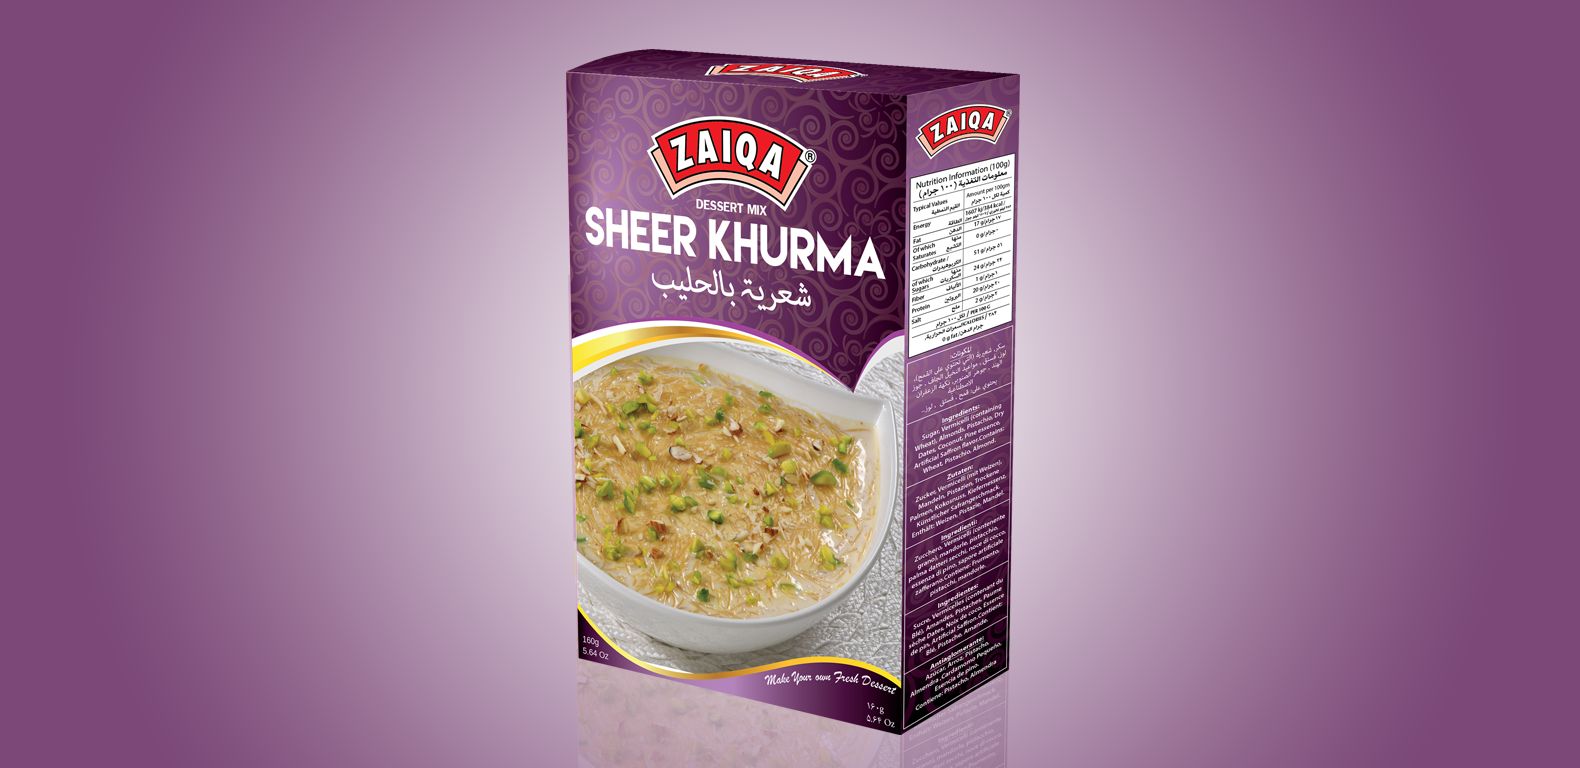 Packaging-Design-Zaiqa-Desserts-Sheer-khurma